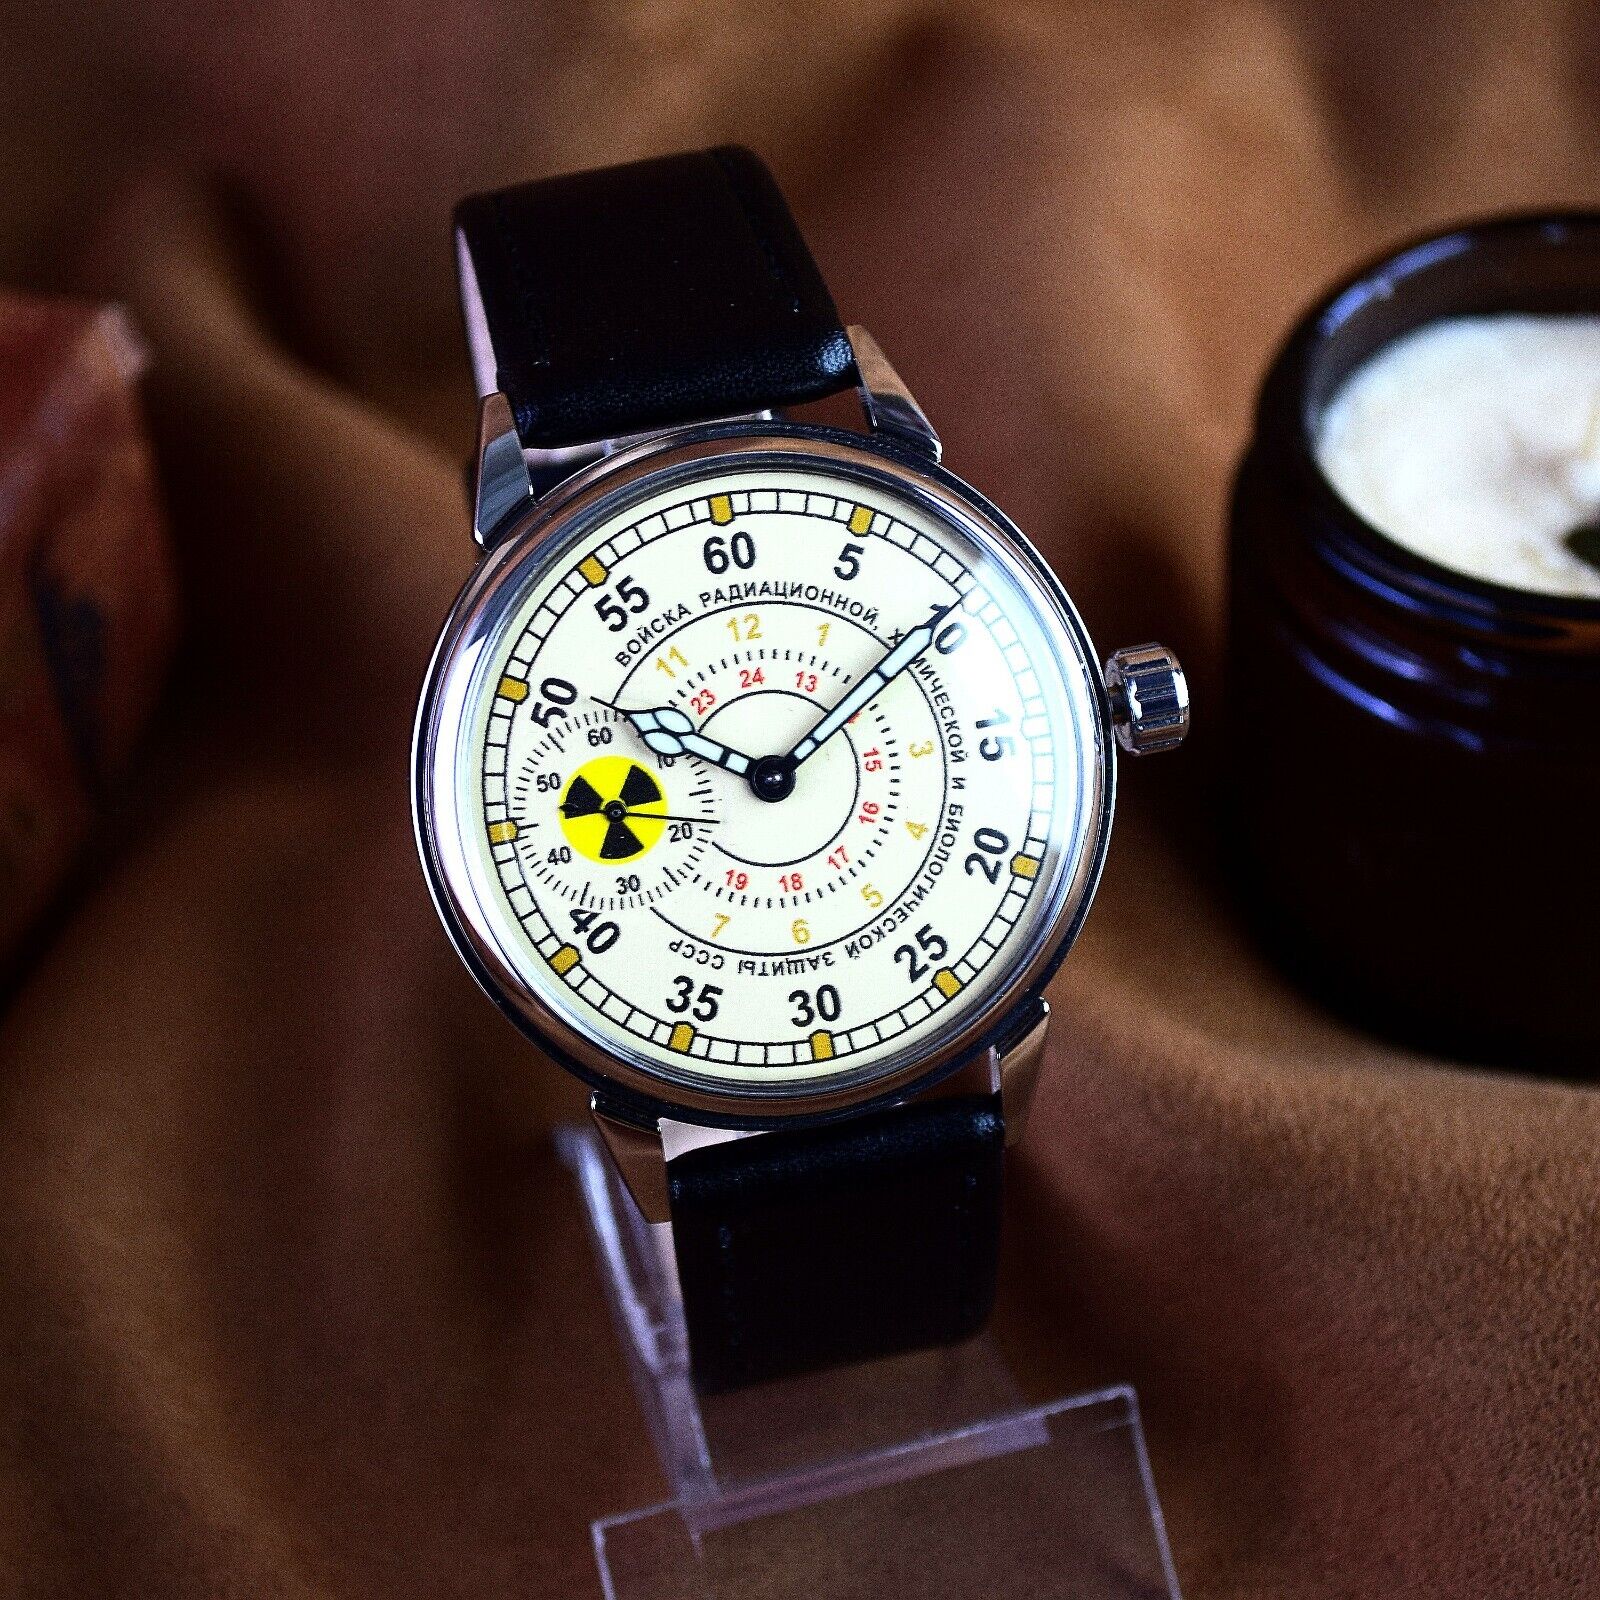 Soviet Vintage Wristwatch Marriage Chemical Defense Forces Mens Watch 3602